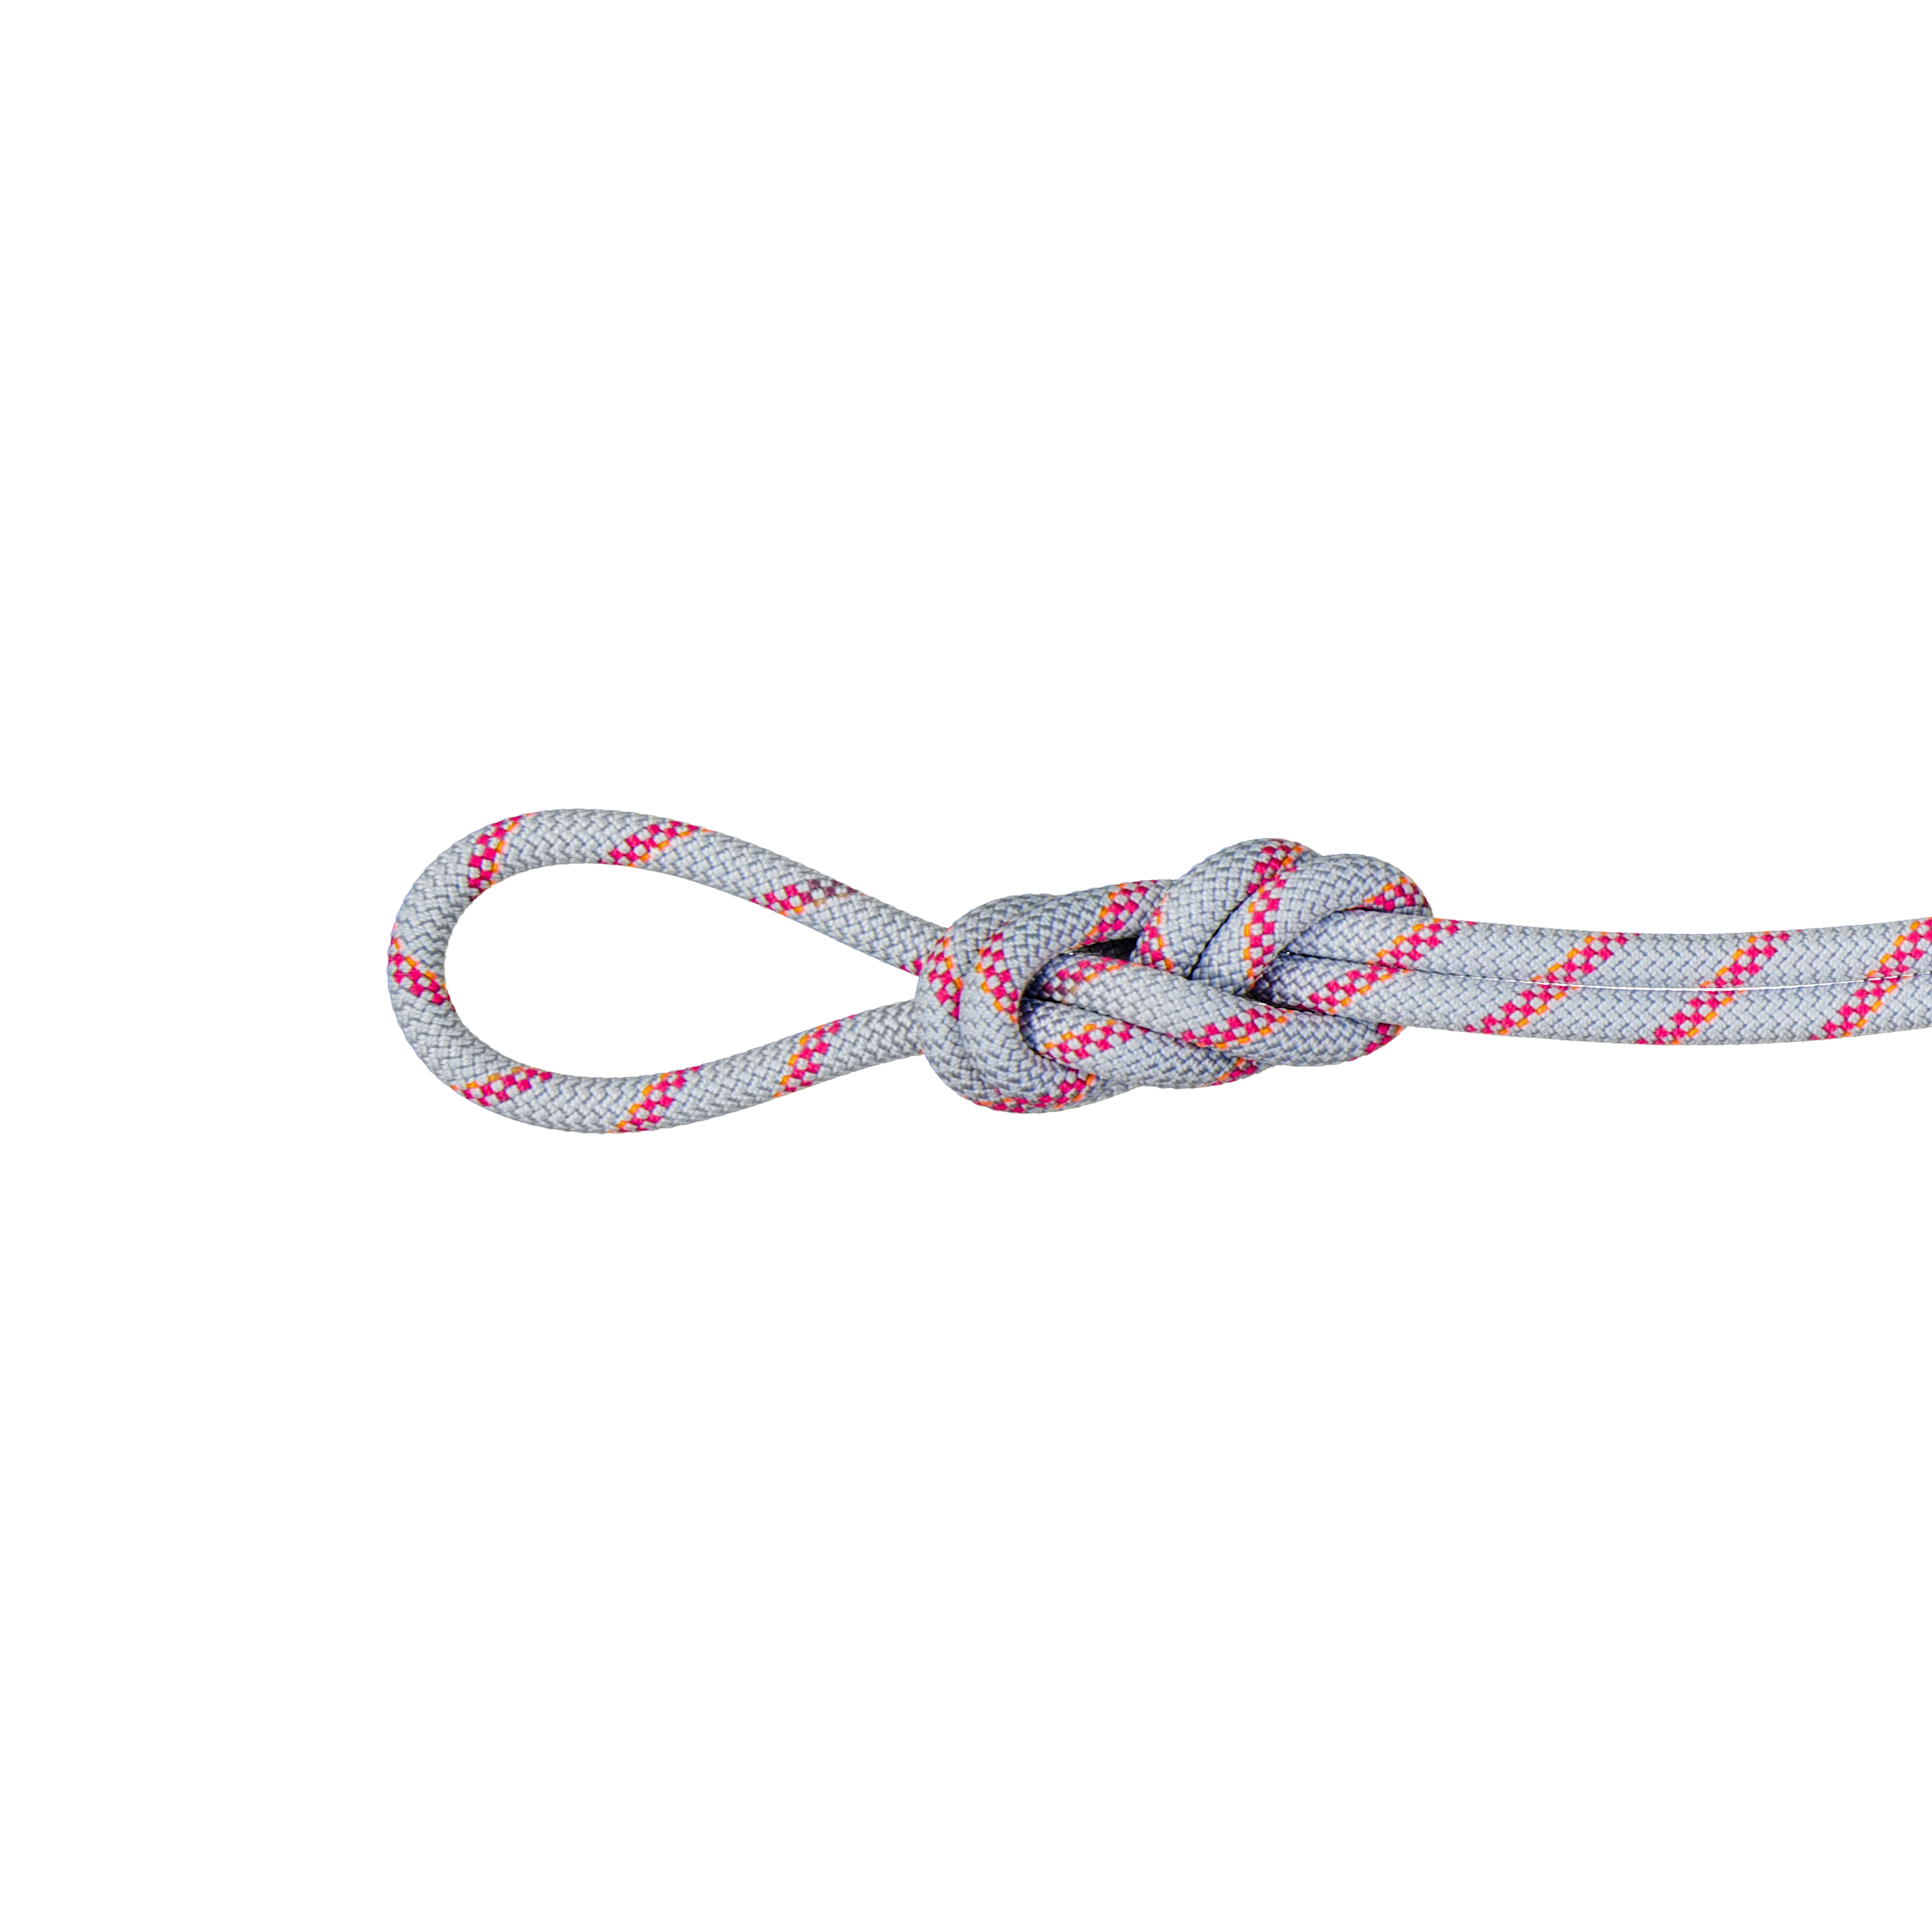 8.0 Alpine Dry Rope - Dry Standard, zen-pink, 70 m thumbnail